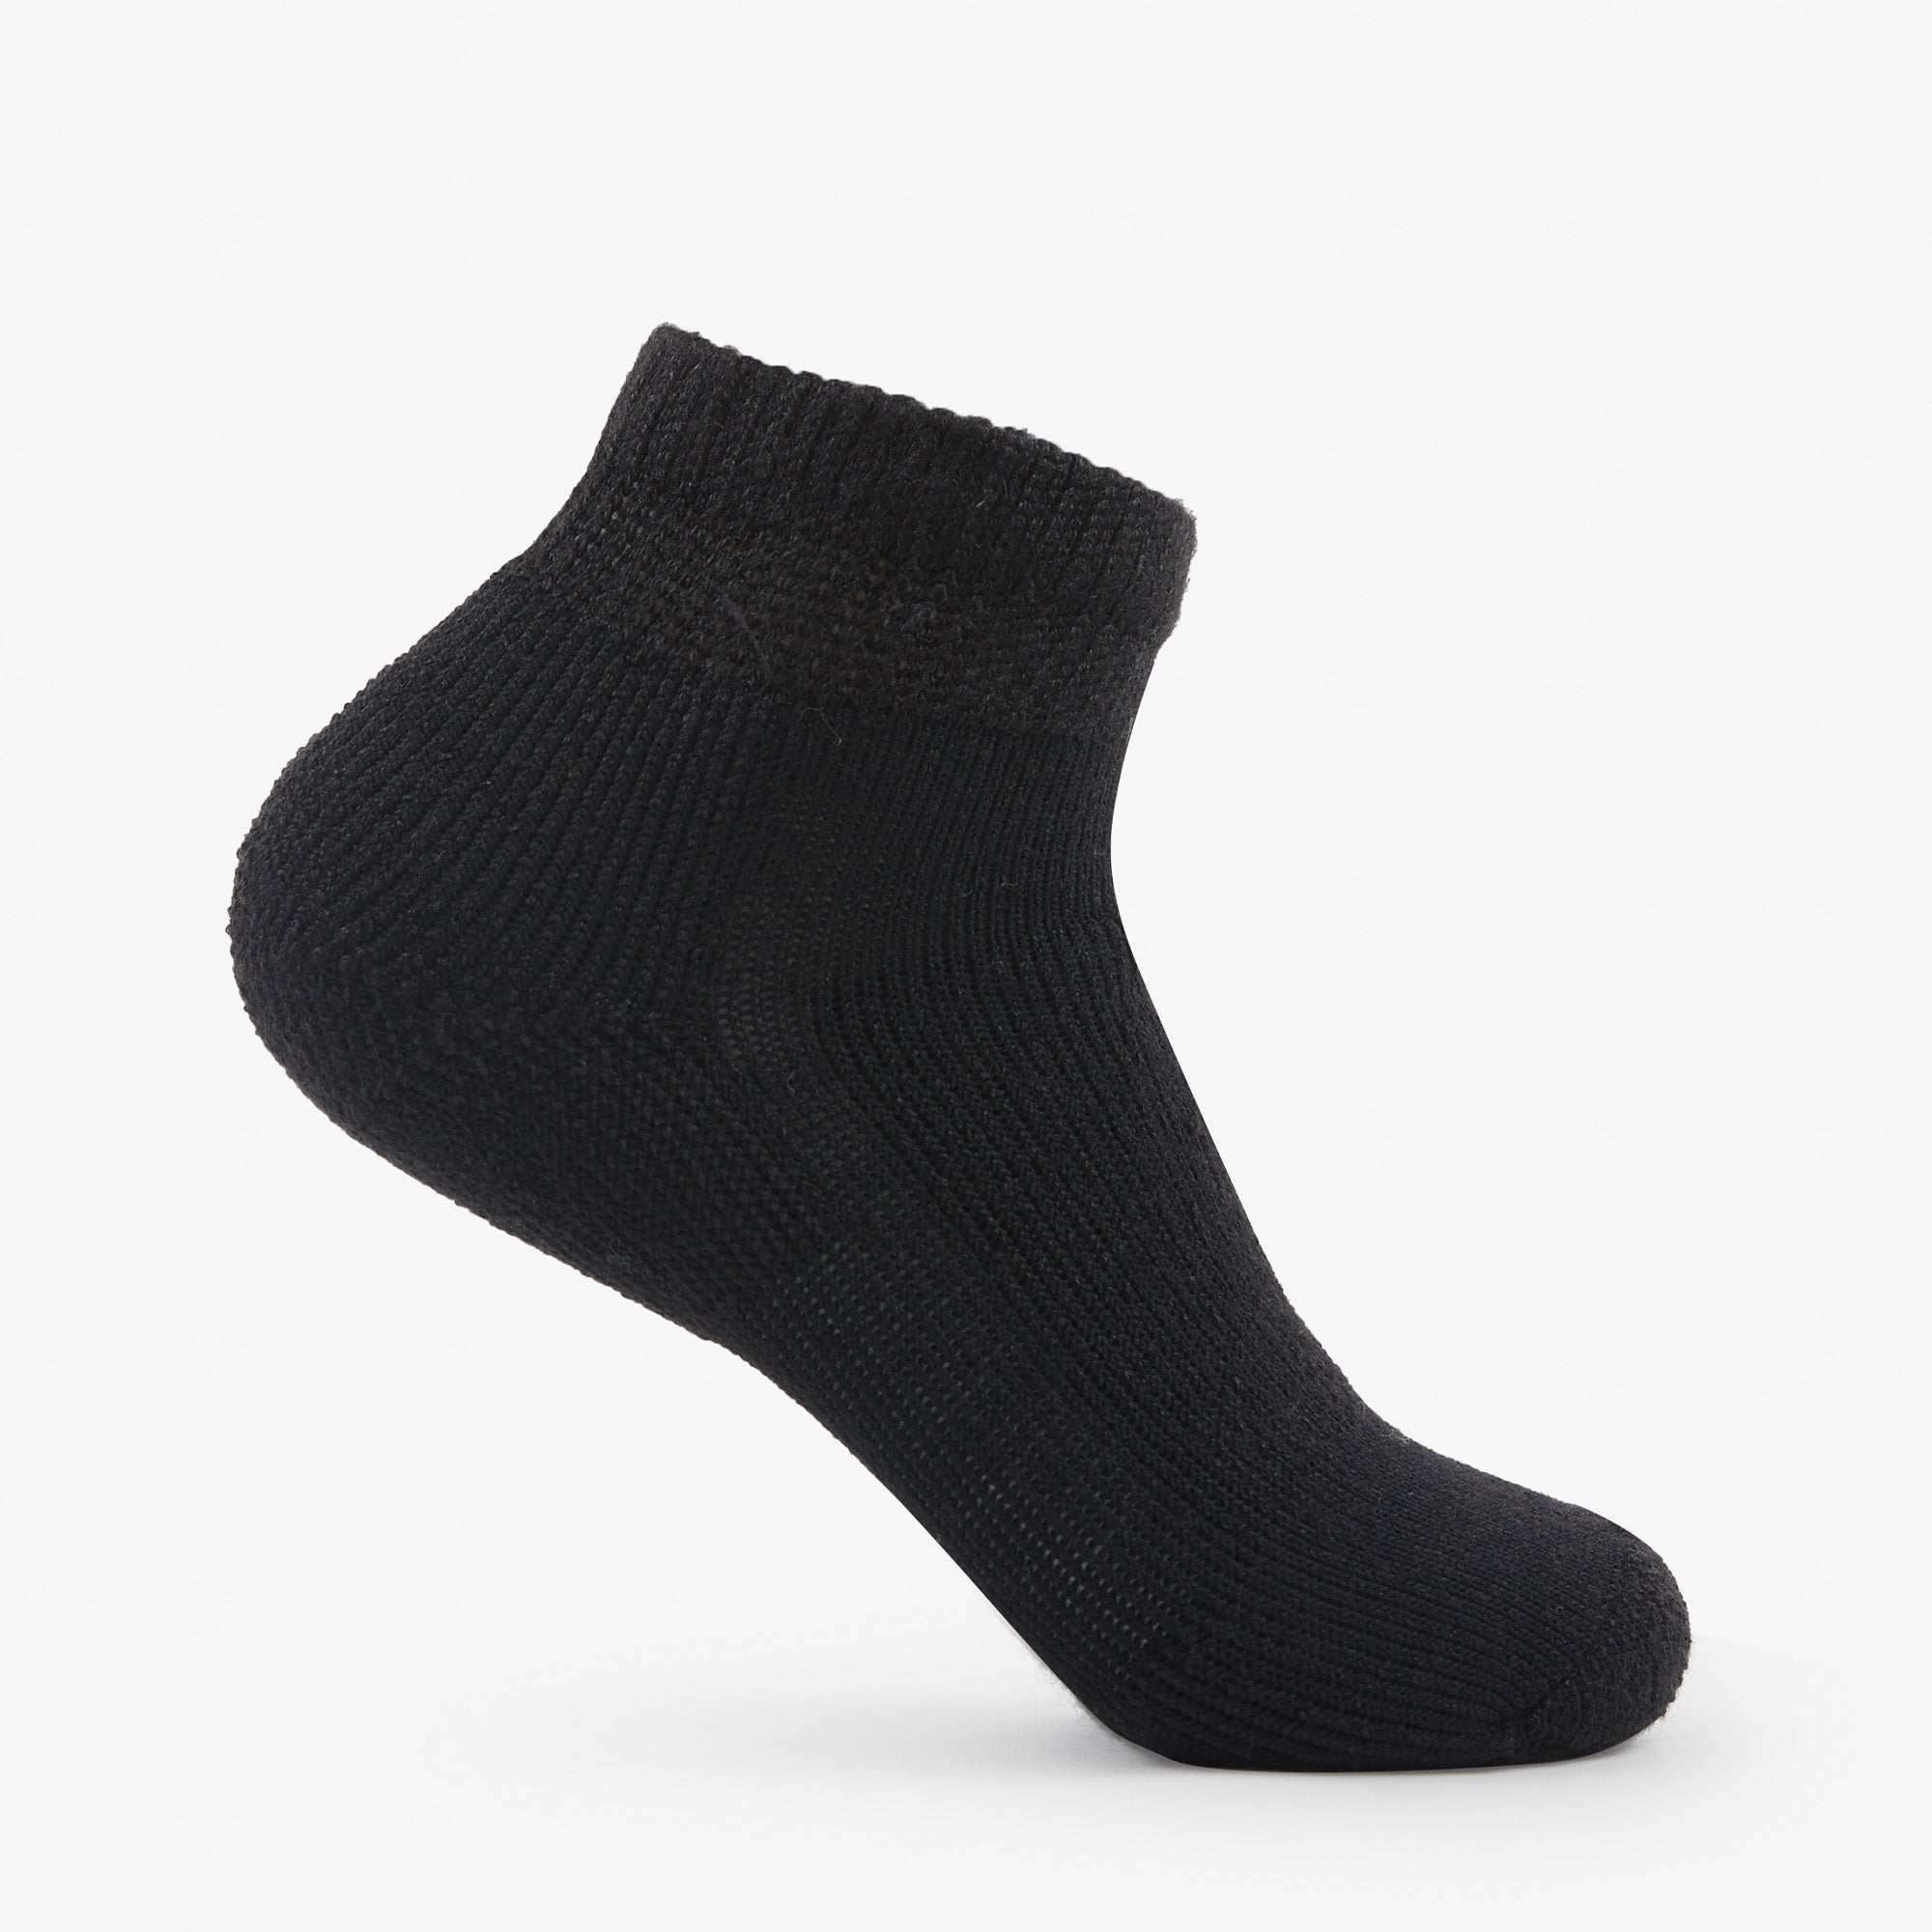 Moderate Cushion Ankle Walking Socks (3 Pairs) | Thorlo